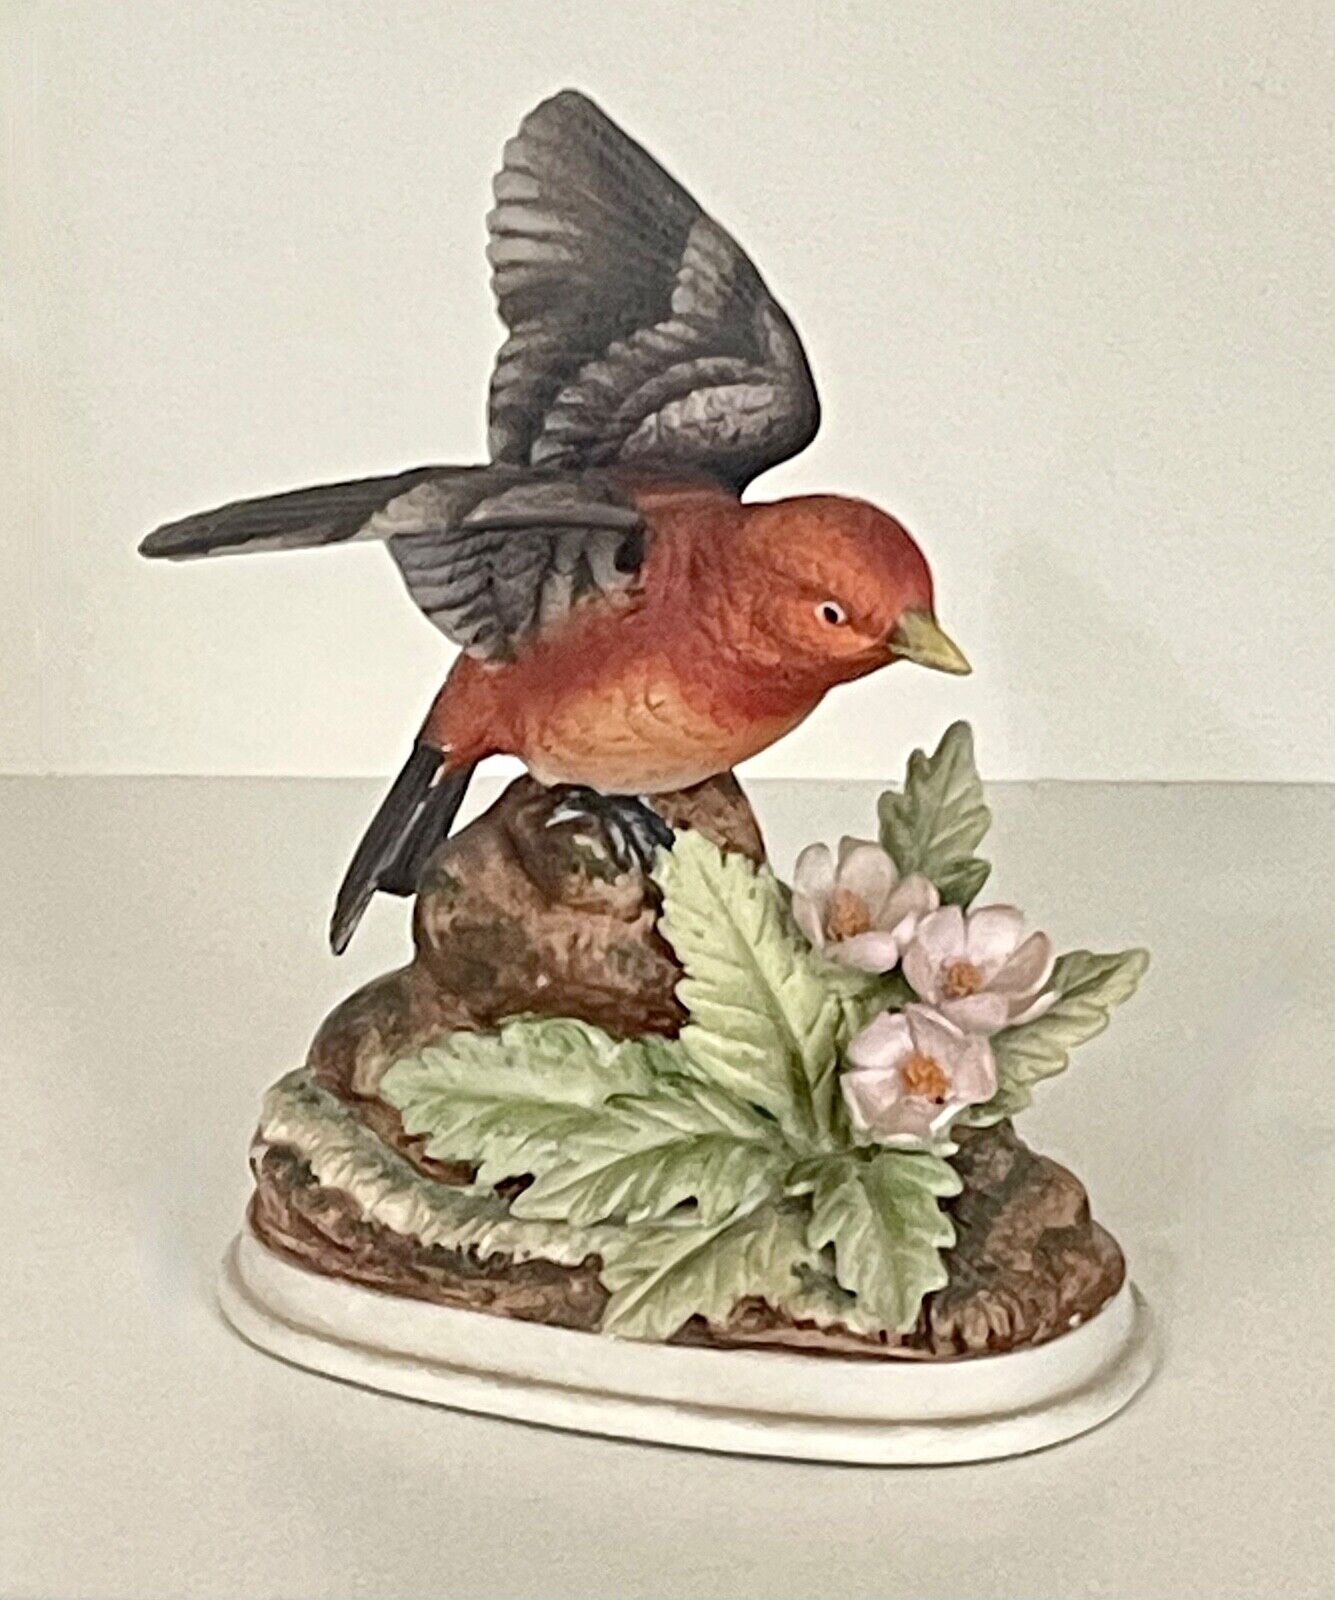 Andrea By Sadek 7703 Scarlet Tanager Bird & Flowers Porcelain Figurine 6